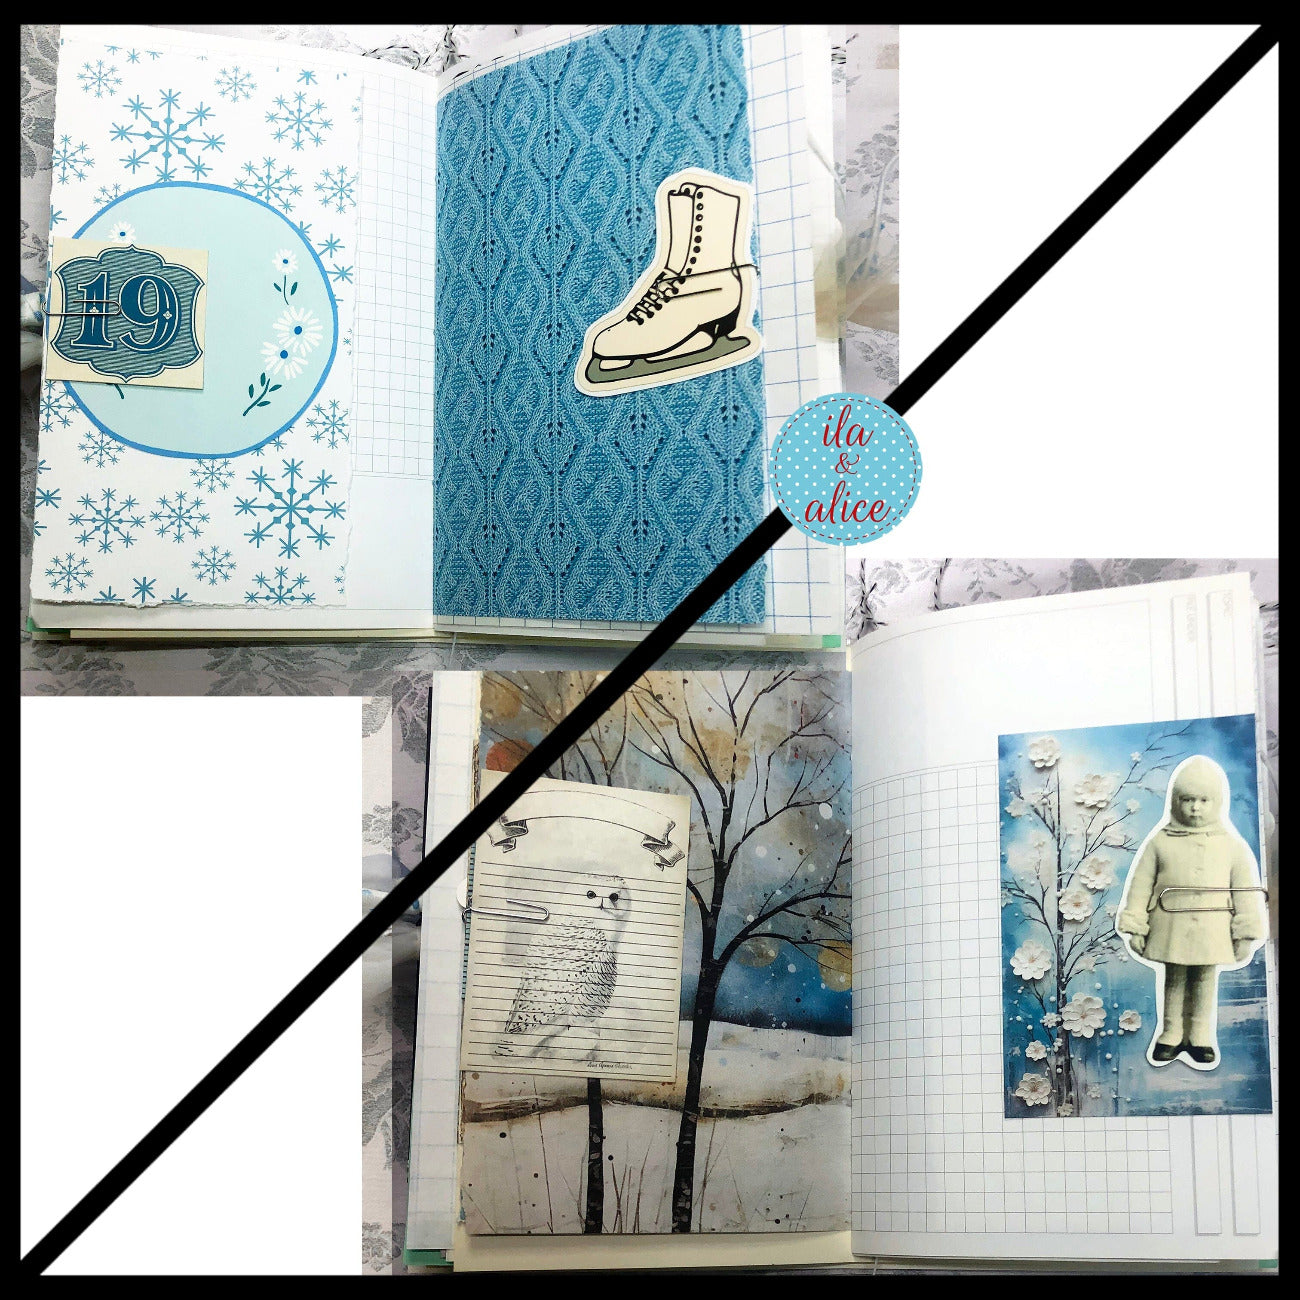 Blue Winter Junk Journal with Owl & Blue Bird Journal ila & alice 